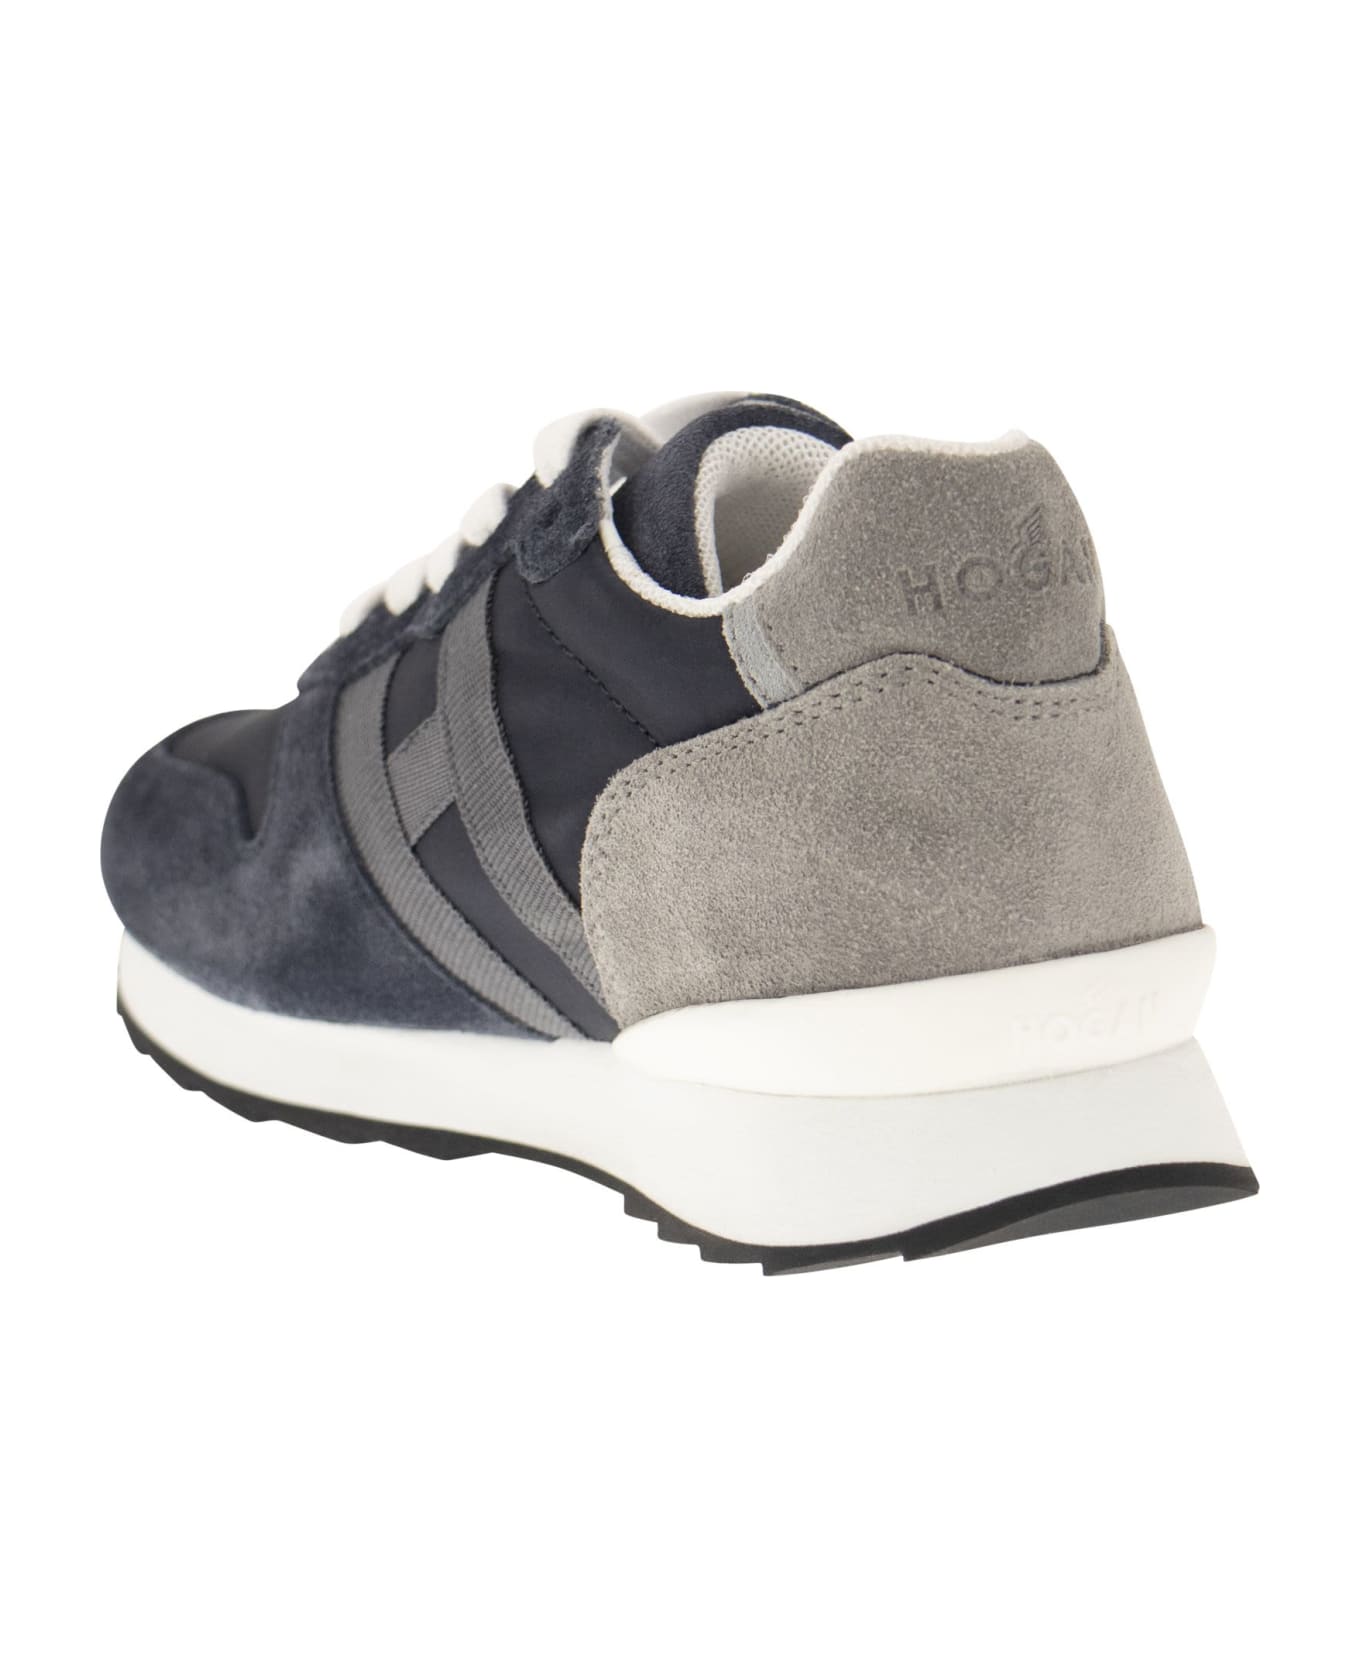 Hogan R261 - Sneakers - Blue/grey